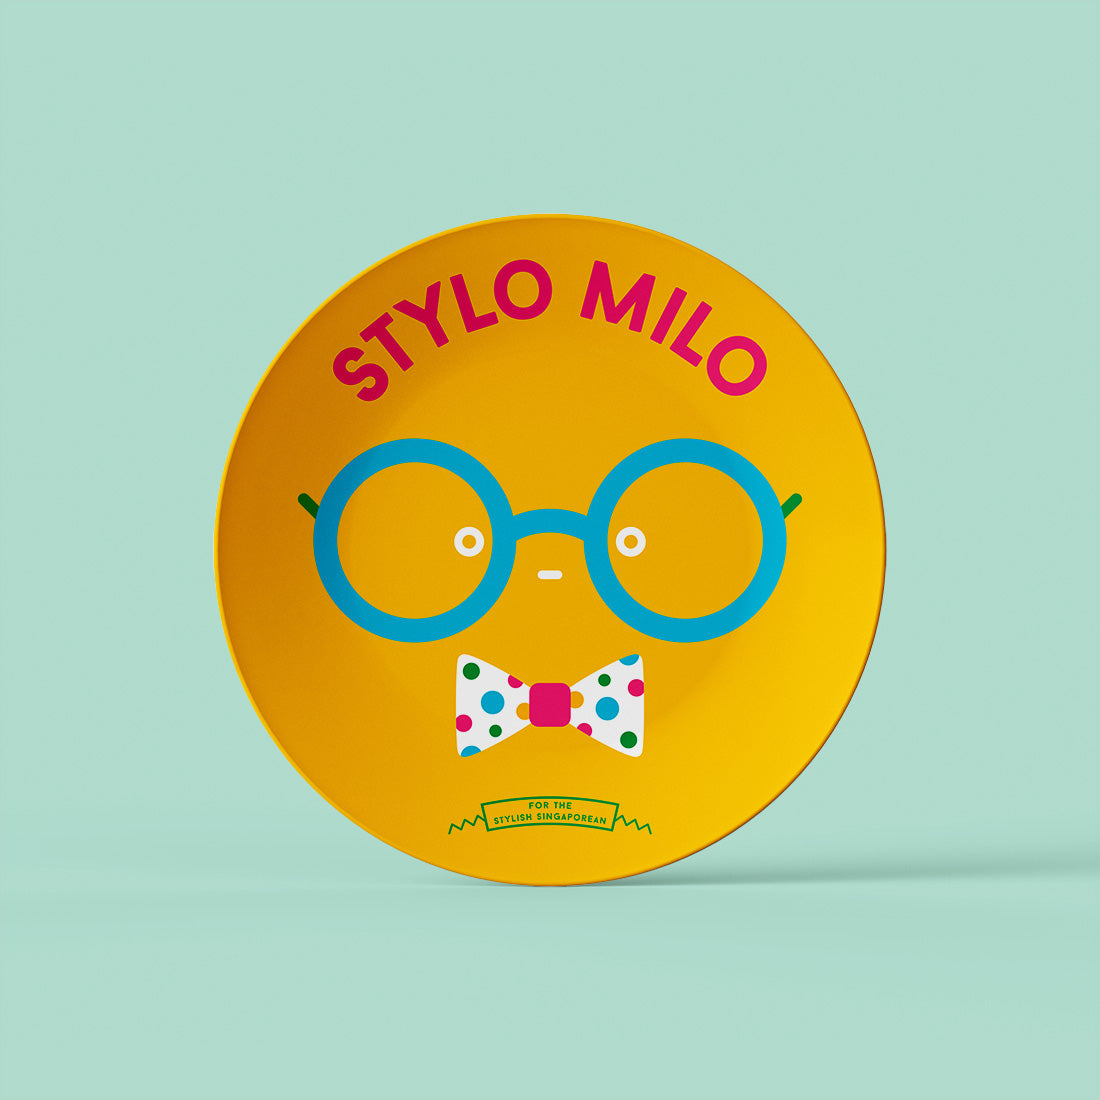 8" Plate – Stylo Milo